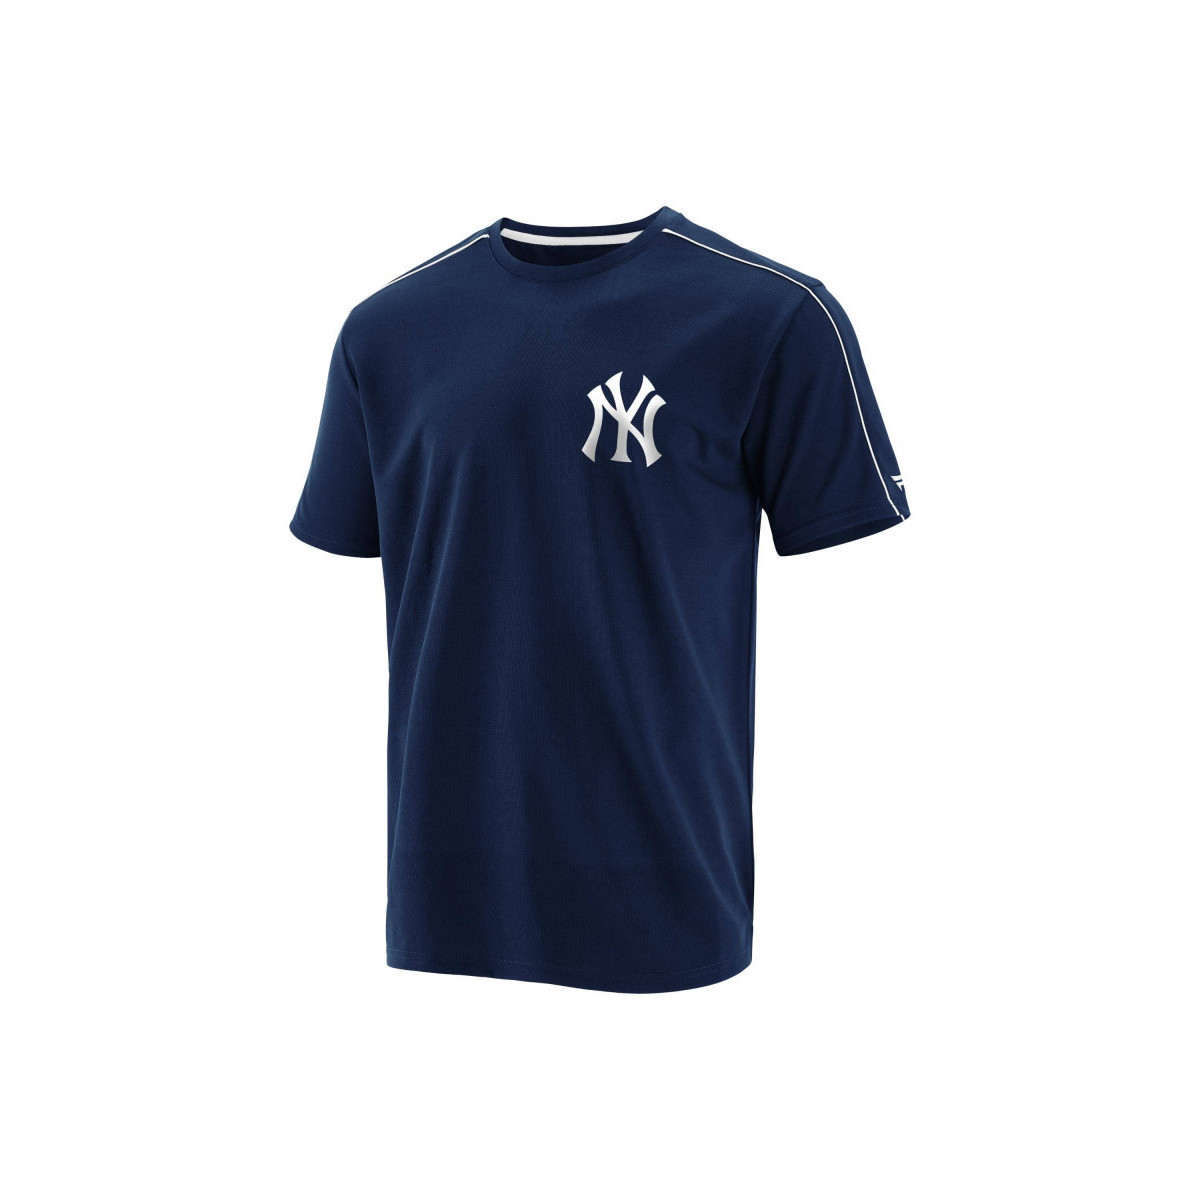 Vêtements T-shirts manches courtes Fanatics T-shirt MLB New York Yankees F Multicolore